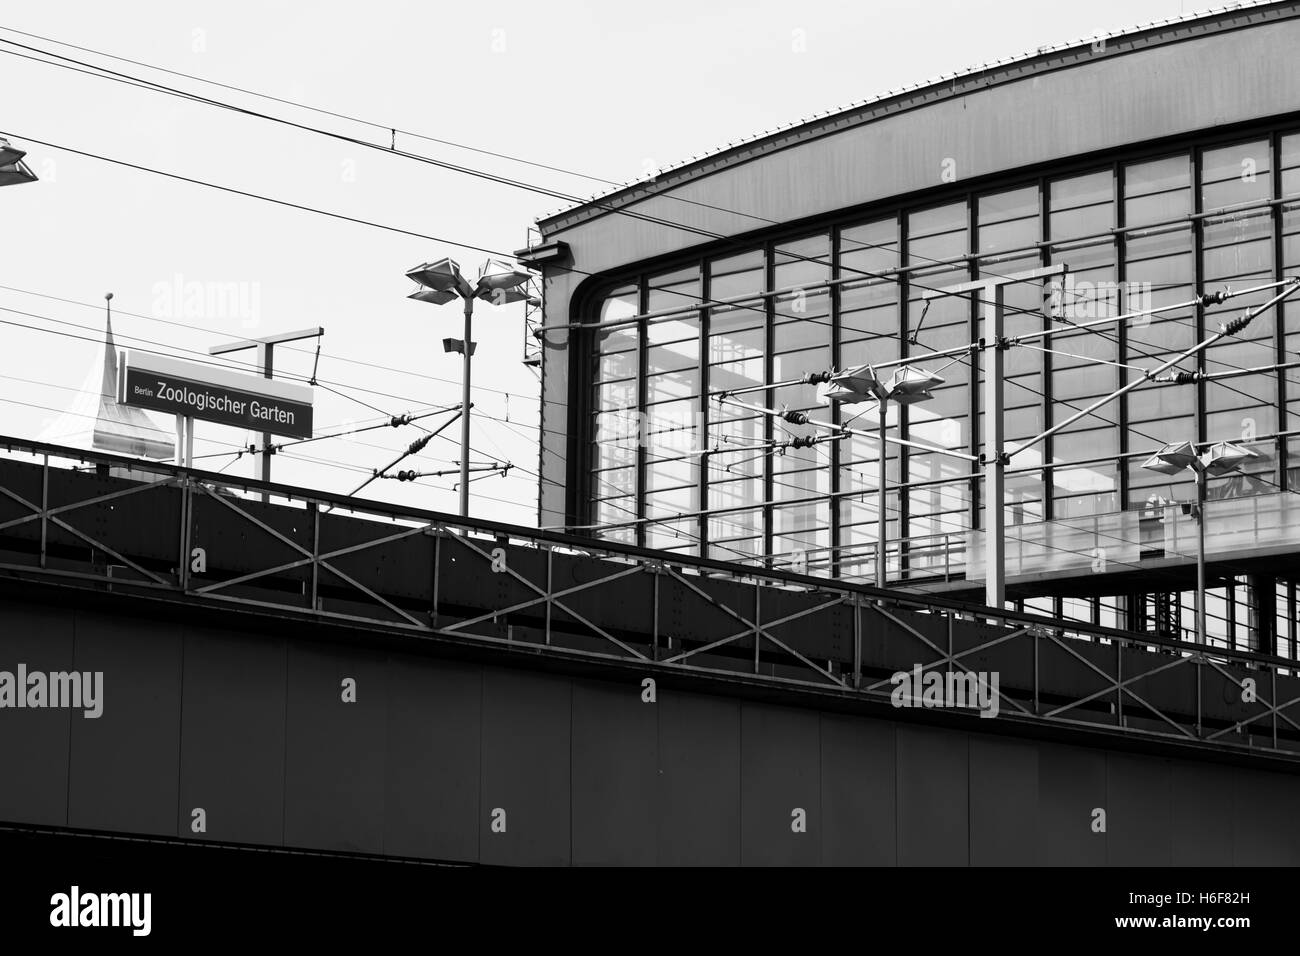 Monochrome view of the Zoologischer Garten S-bahn station in Berlin. Stock Photo